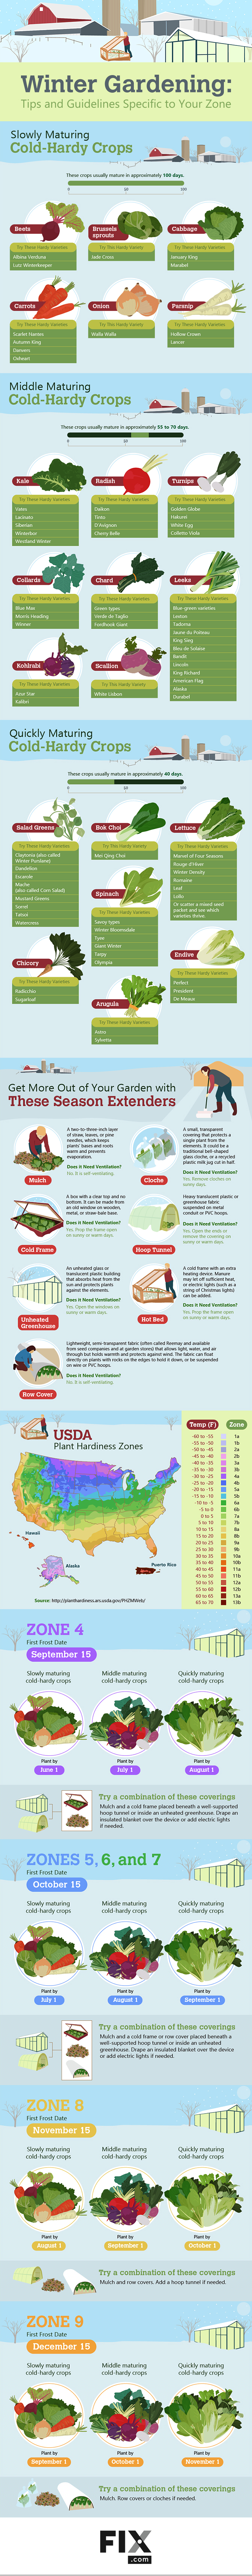 Winter gardening infographic